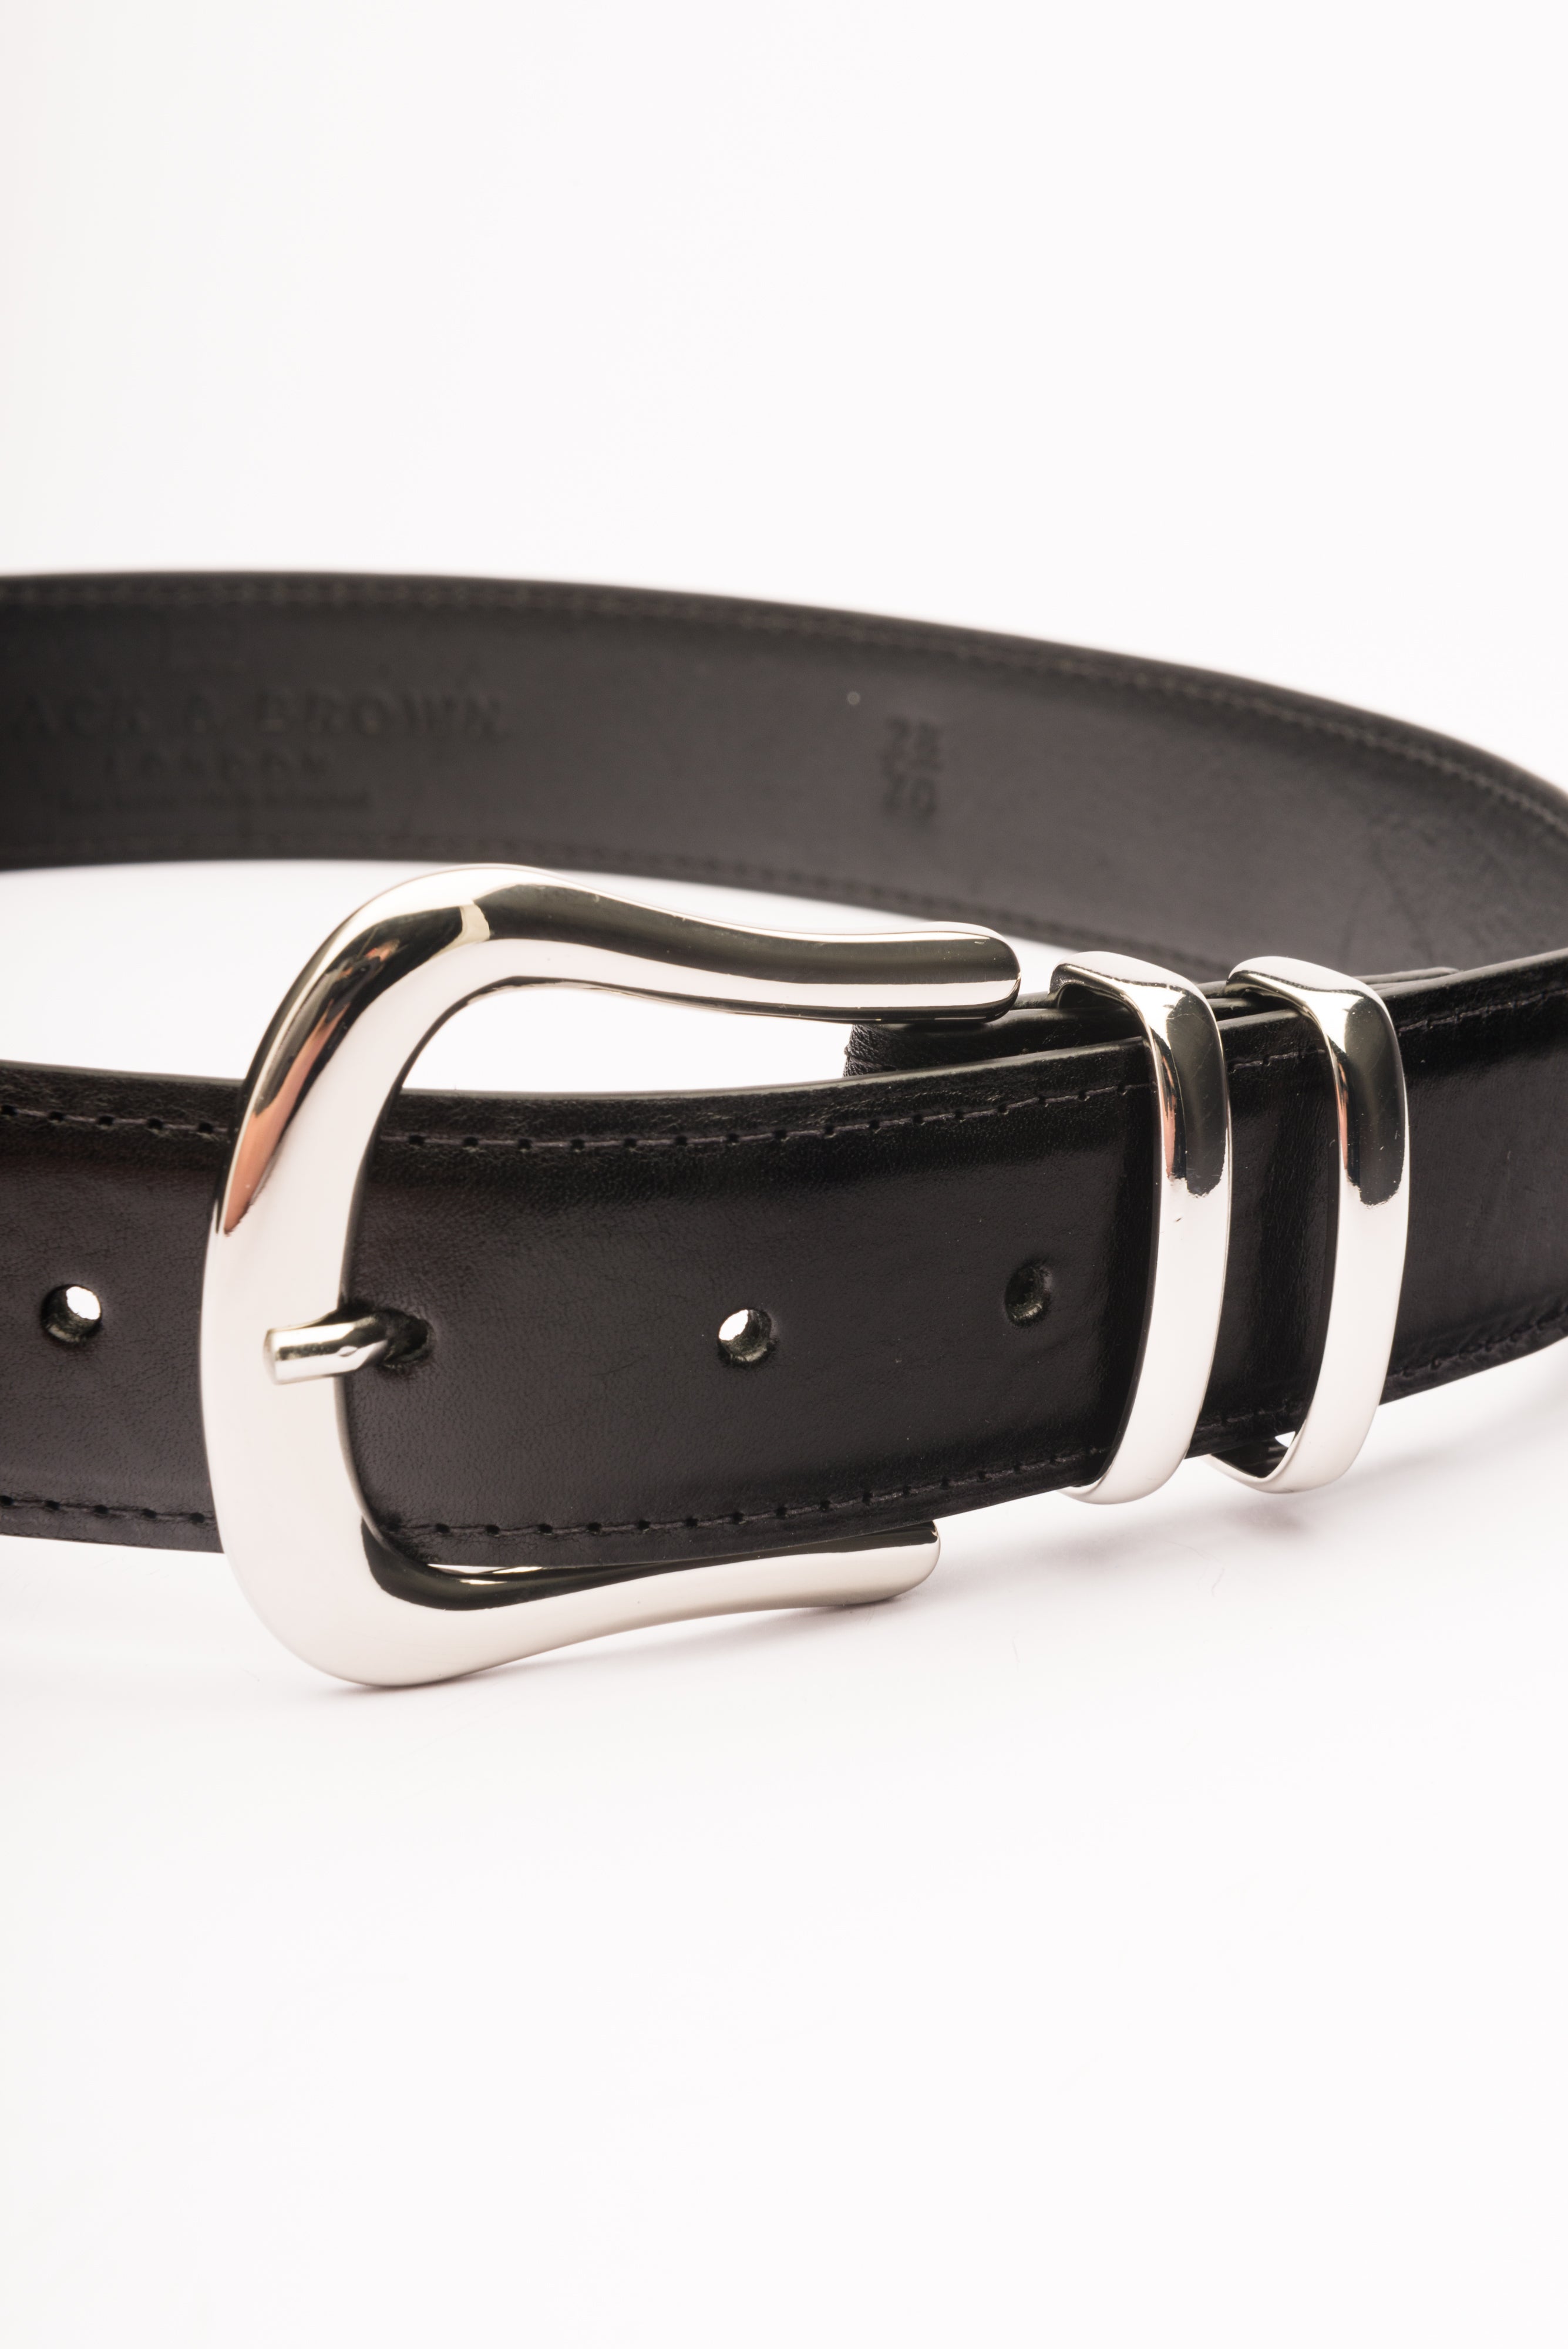 Marina silver buckle leather waist belt